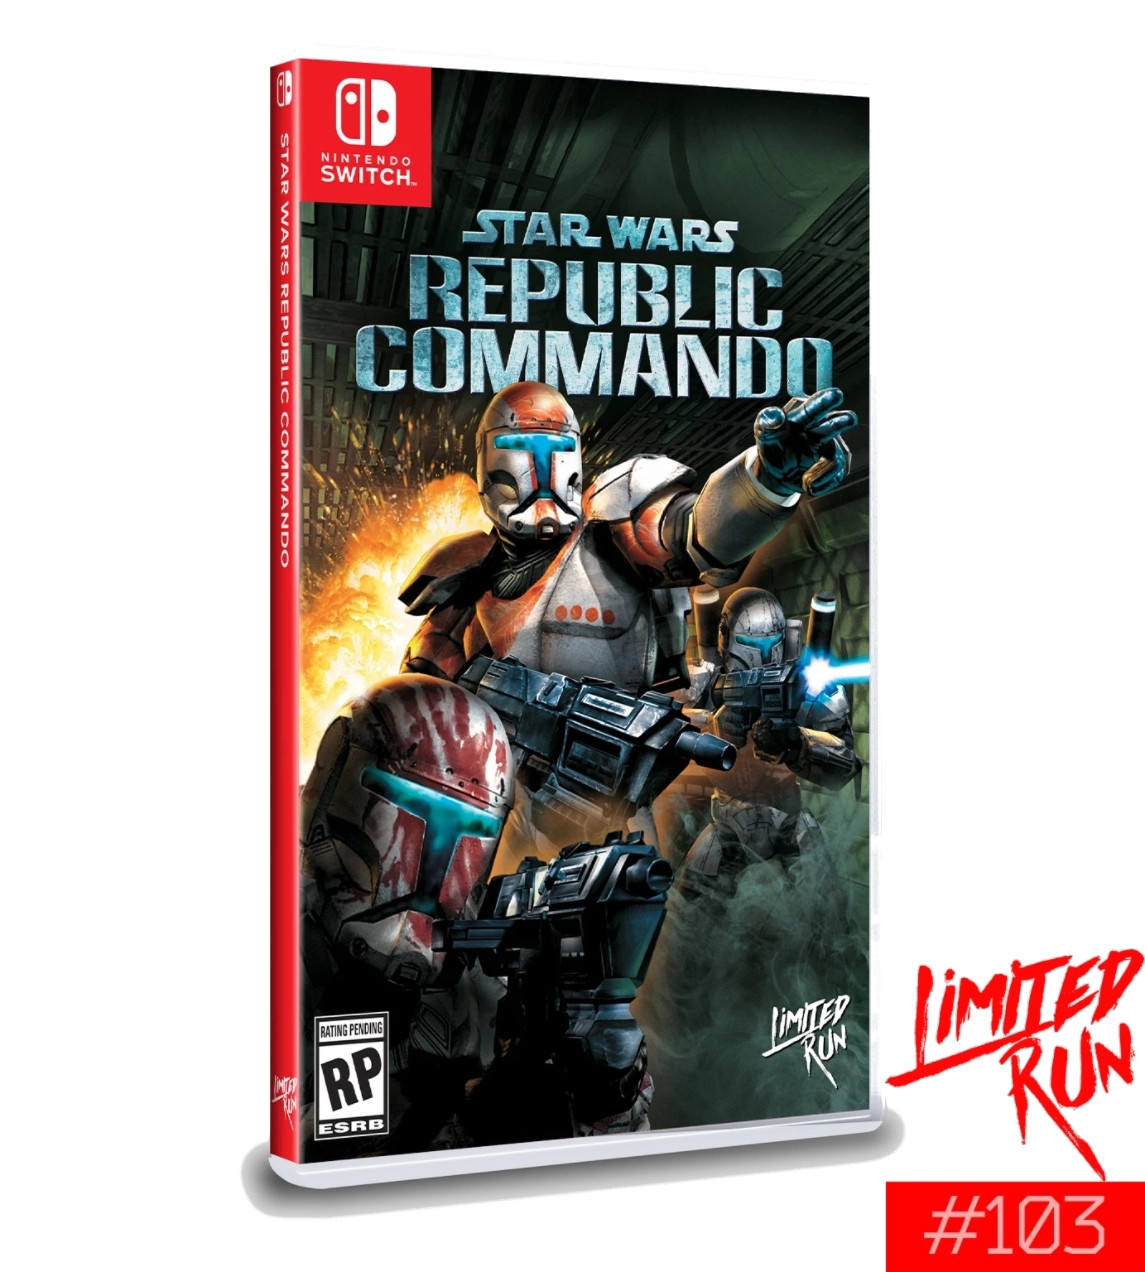 Star Wars Republic Commando (Limited Run Games) - Nintendo Switch